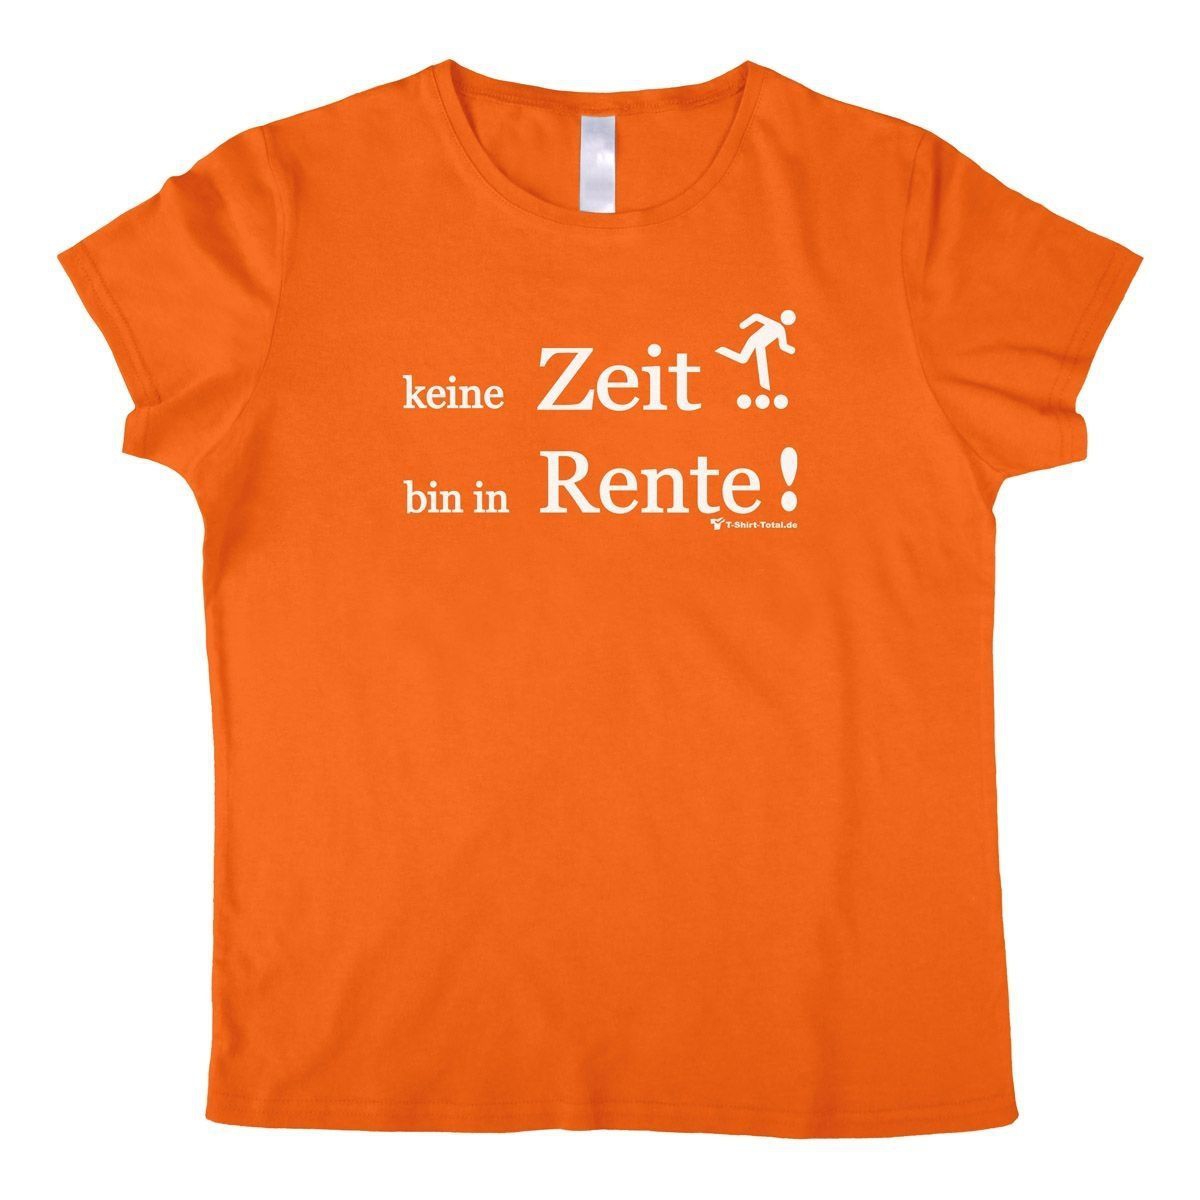 Bin in Rente Woman T-Shirt orange Extra Large